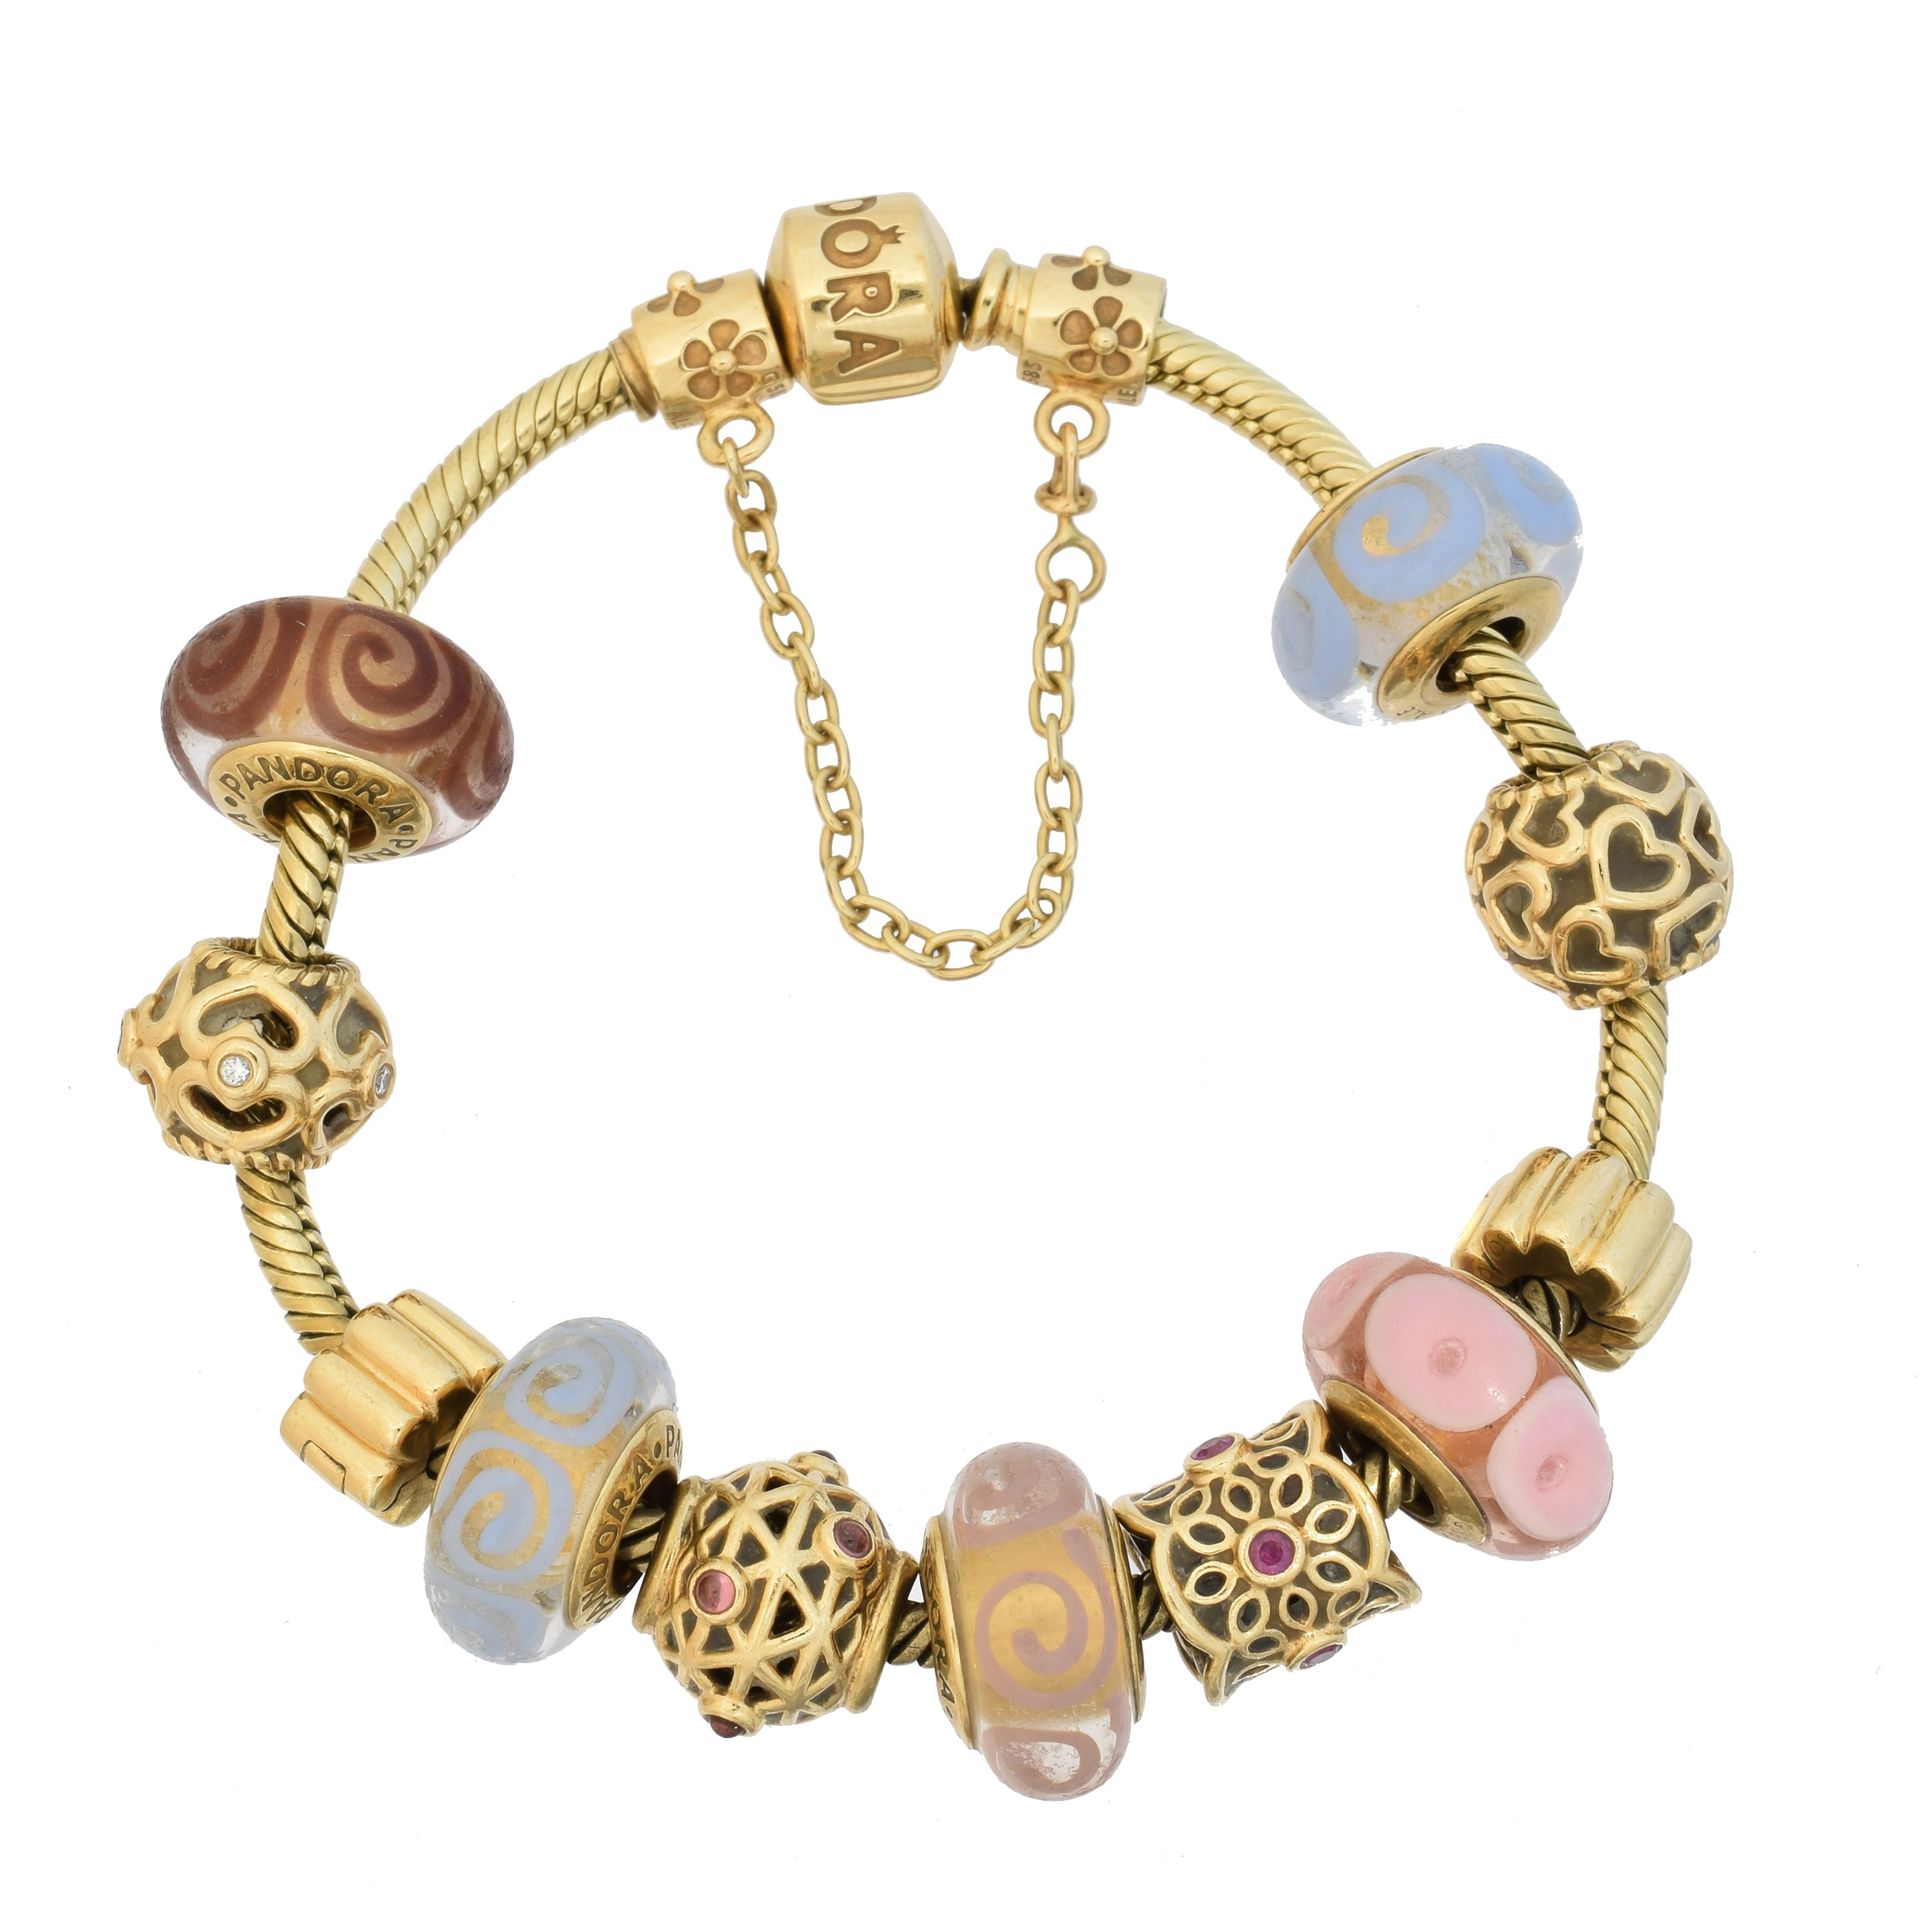 A 14ct gold Pandora charm bracelet, 
一条14K金潘多拉吊饰手链，花式手链悬挂着12个吊饰，有潘多拉的制作标记，长18厘米，&hellip;